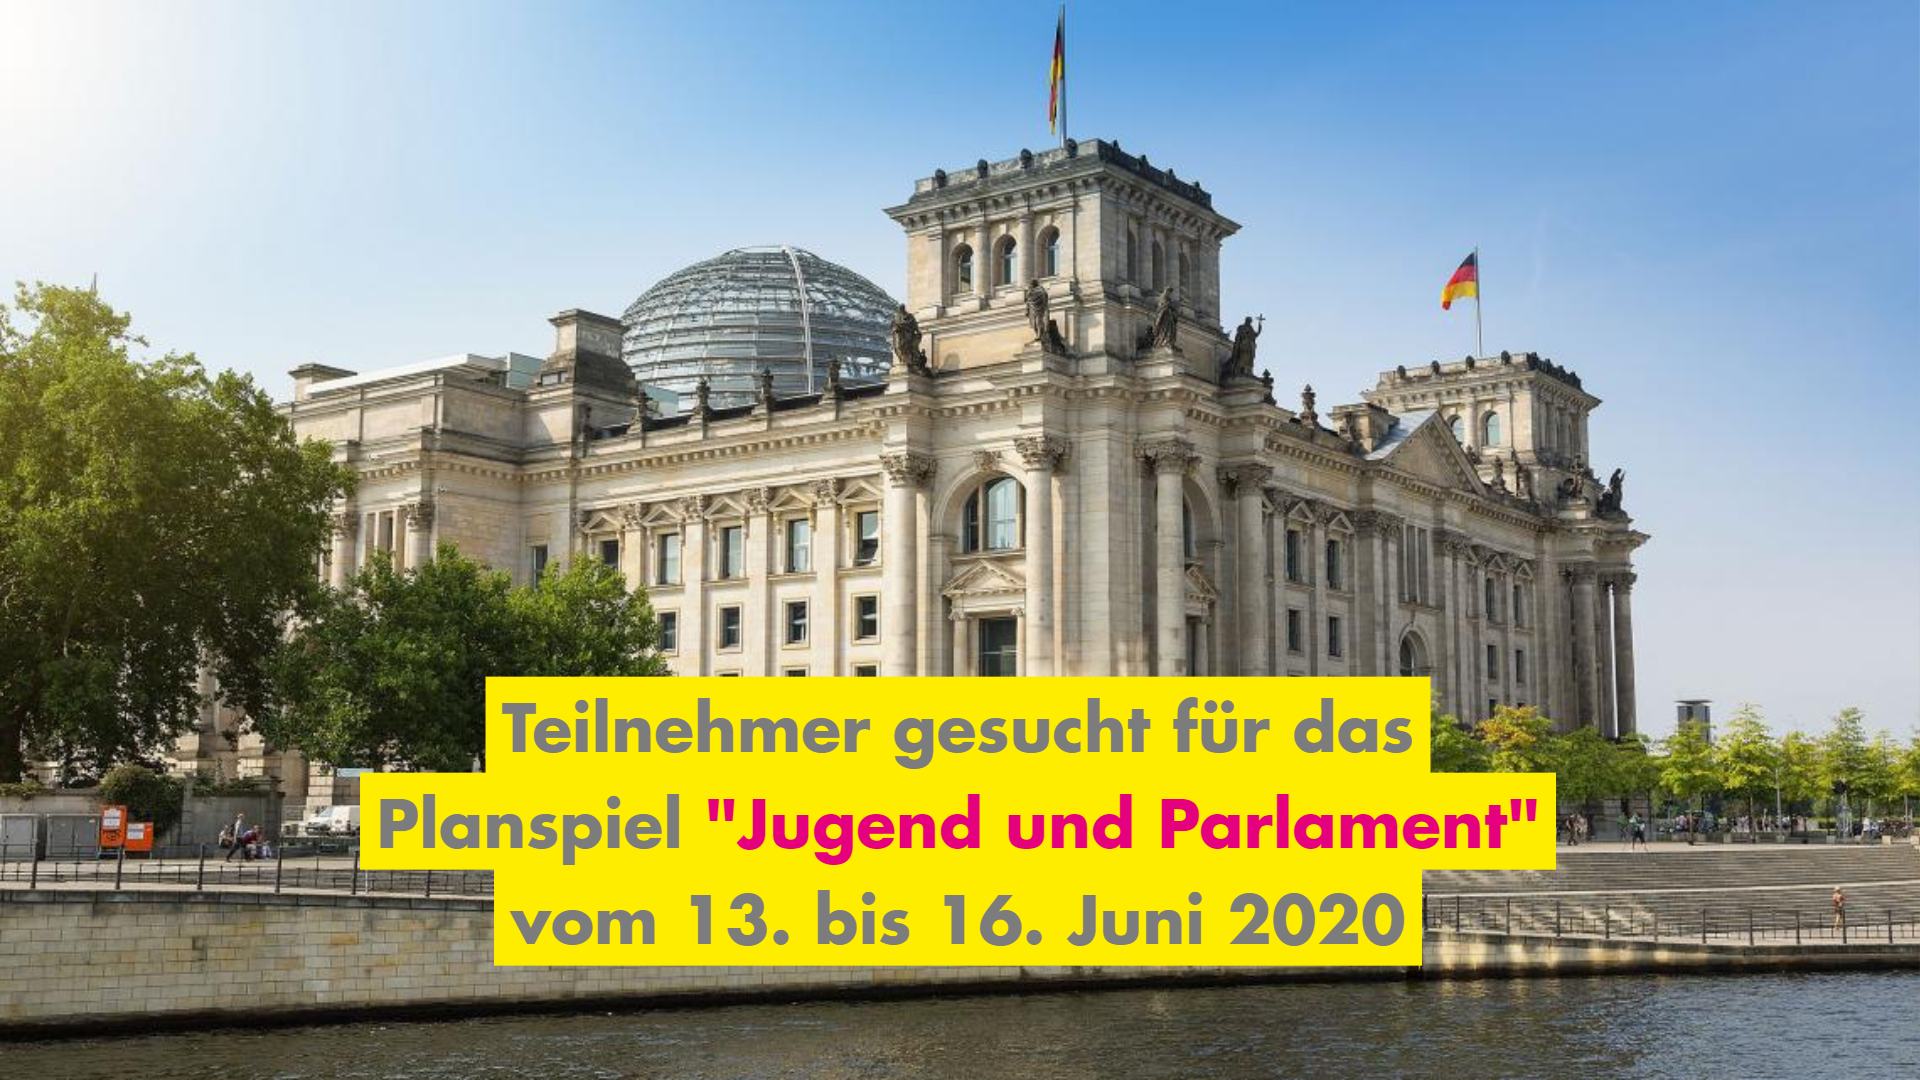 Planspiel "Jugend und Parlament"